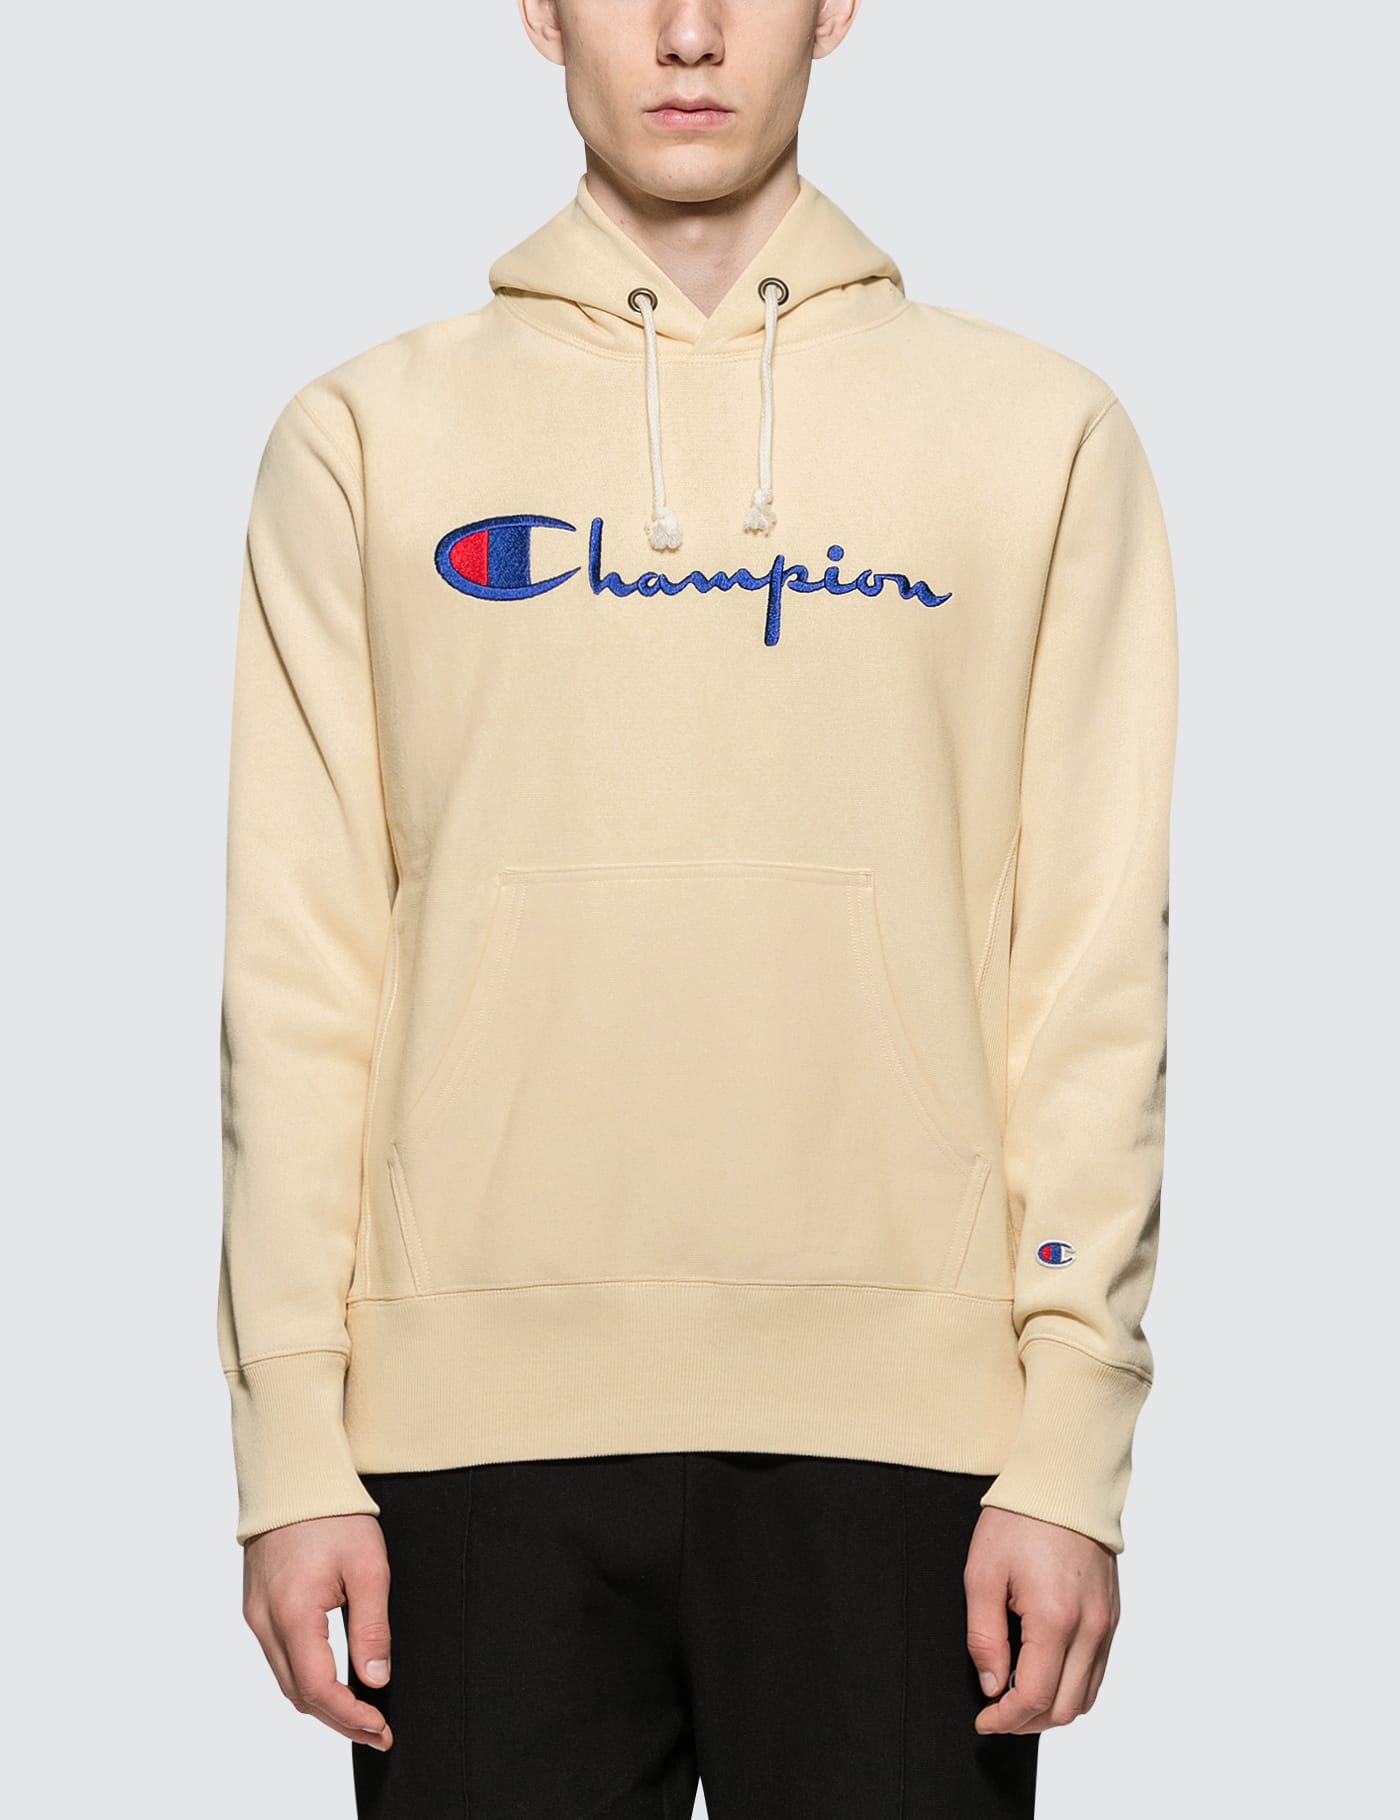 script logo hoodie by champion